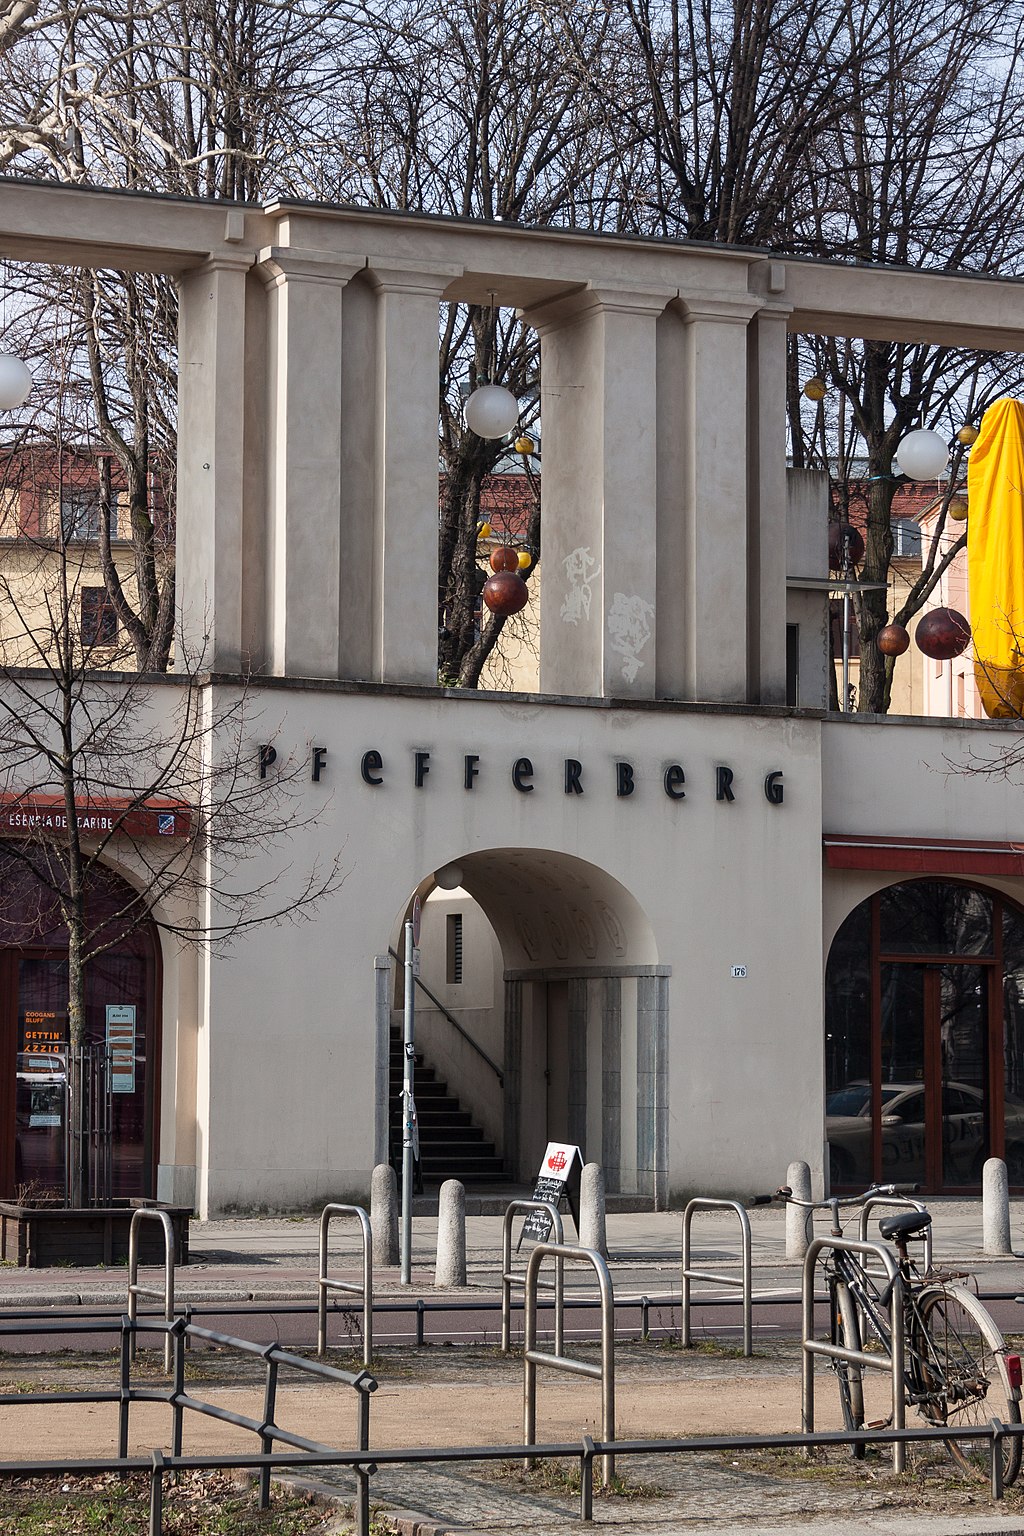 Pffeferberg, home of the ICI (Image Credit)